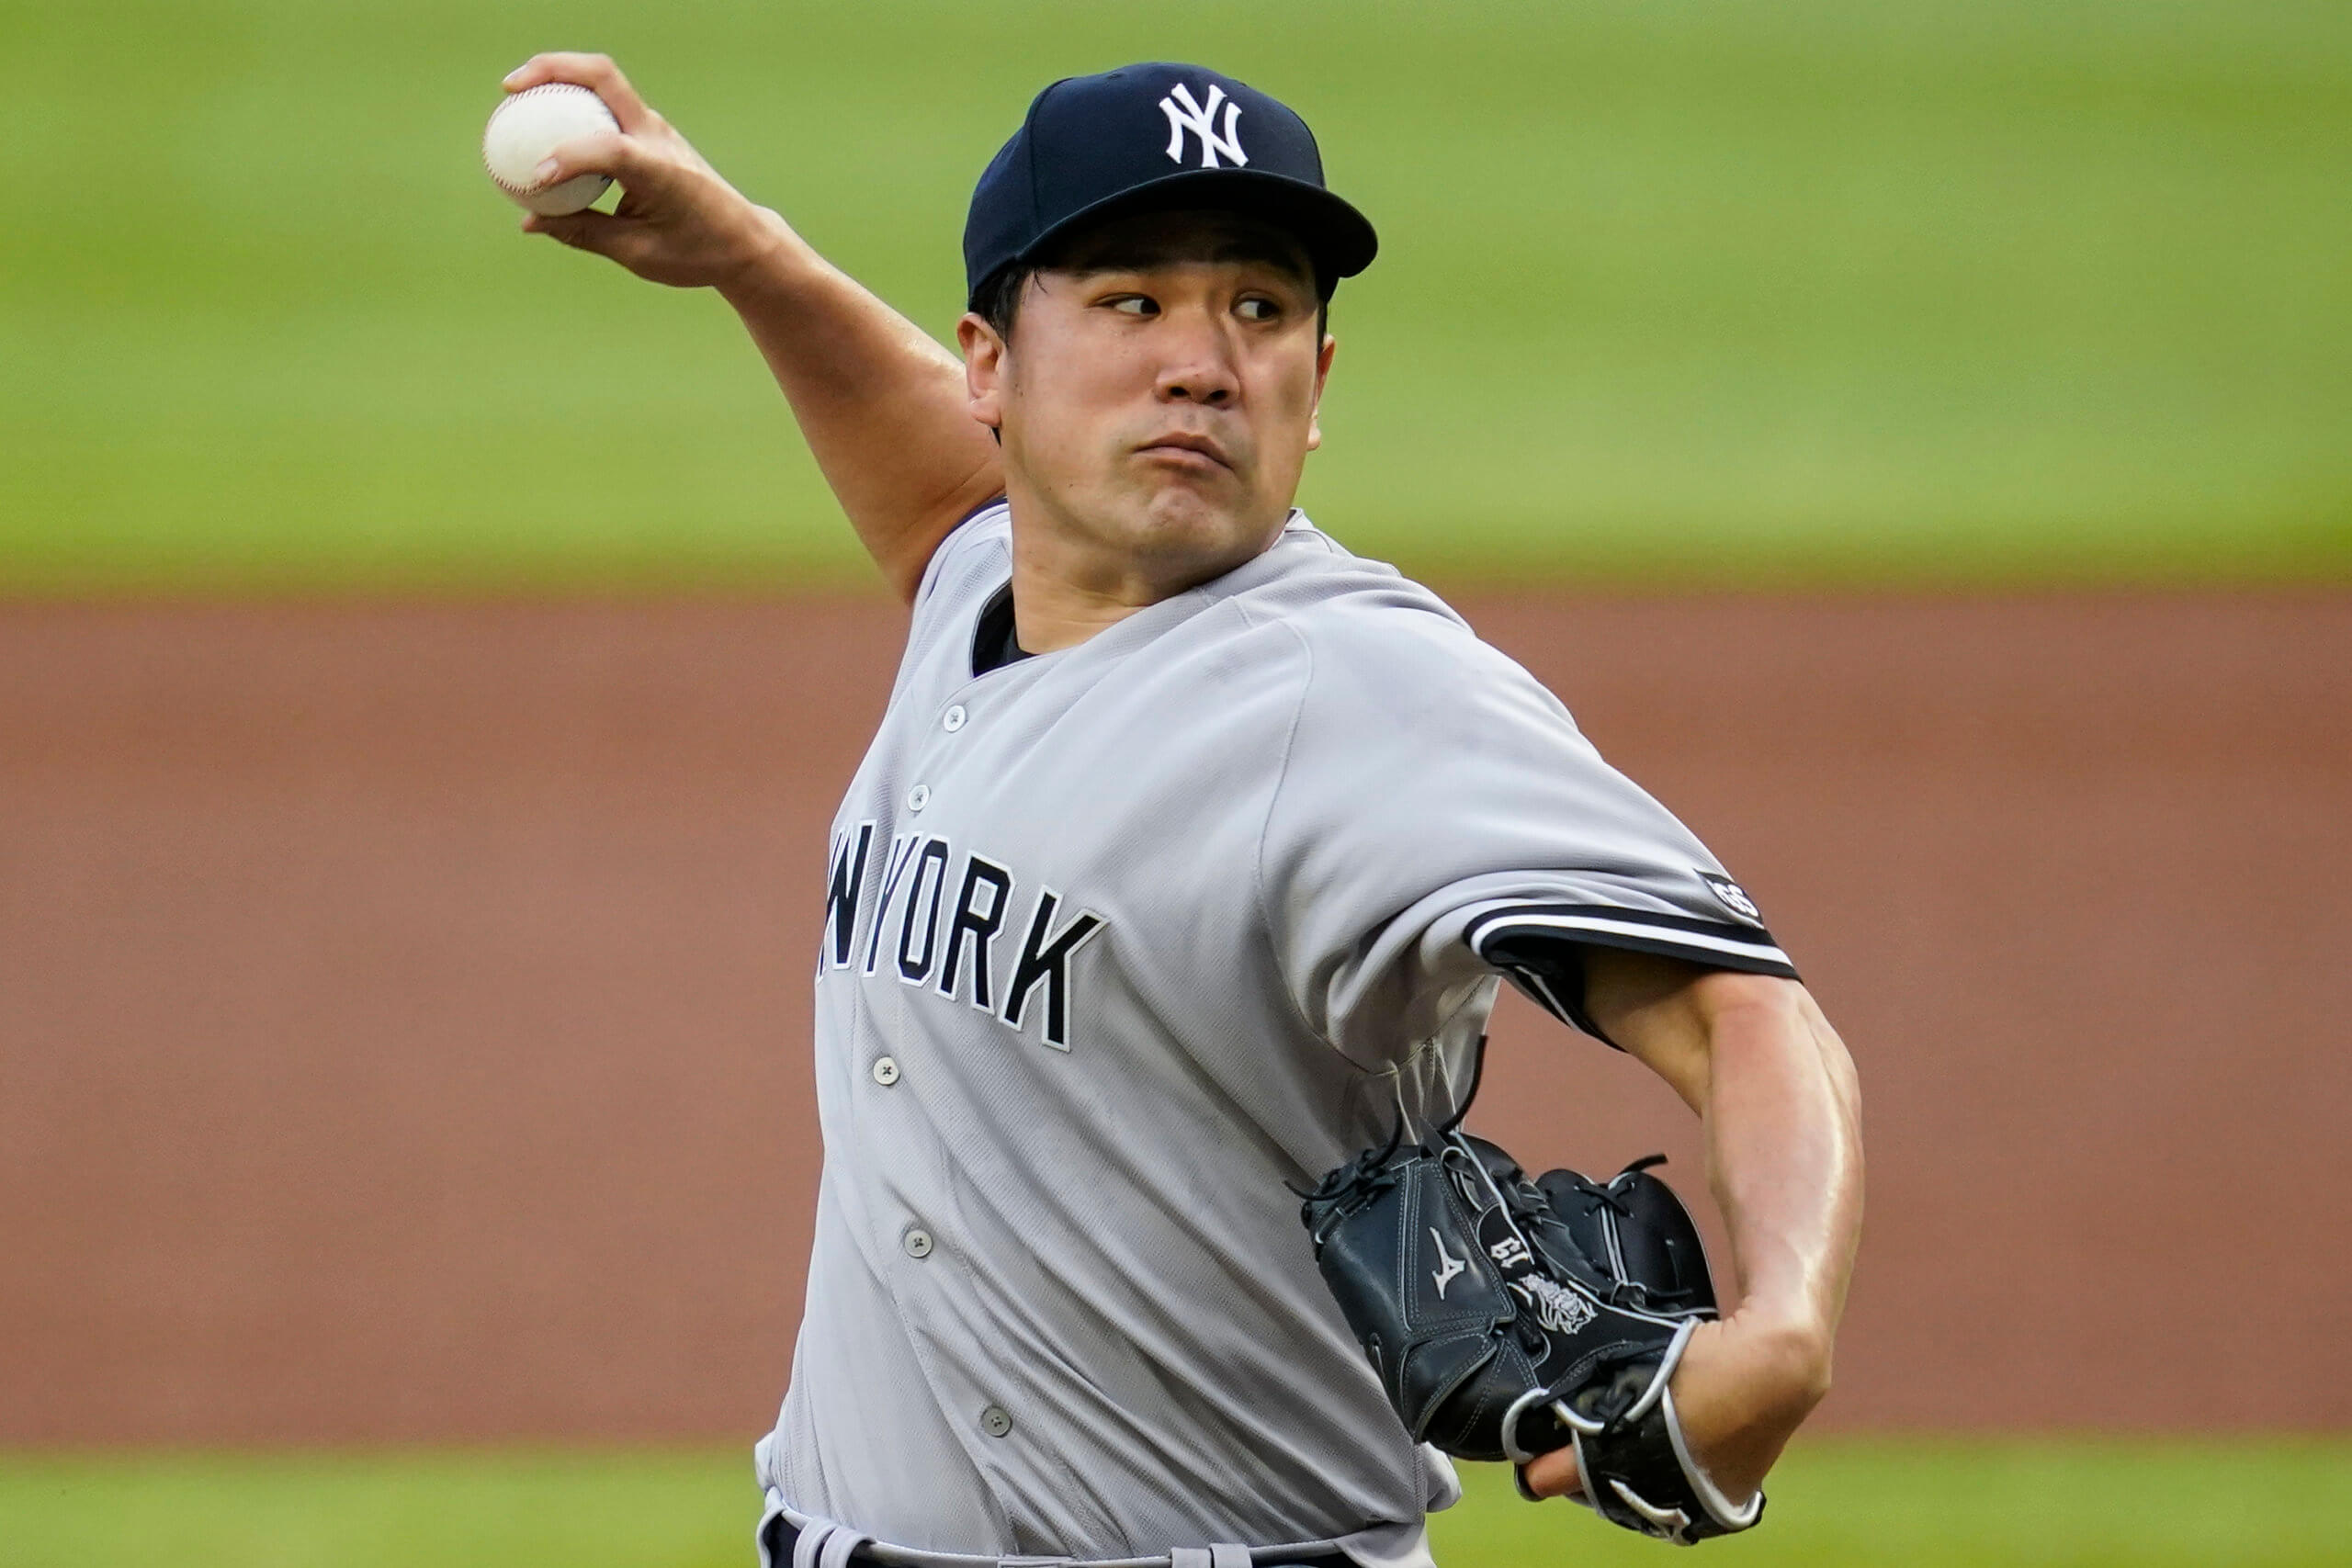 Masahiro Tanaka opted for Japan after shunned by Yankees: 'I